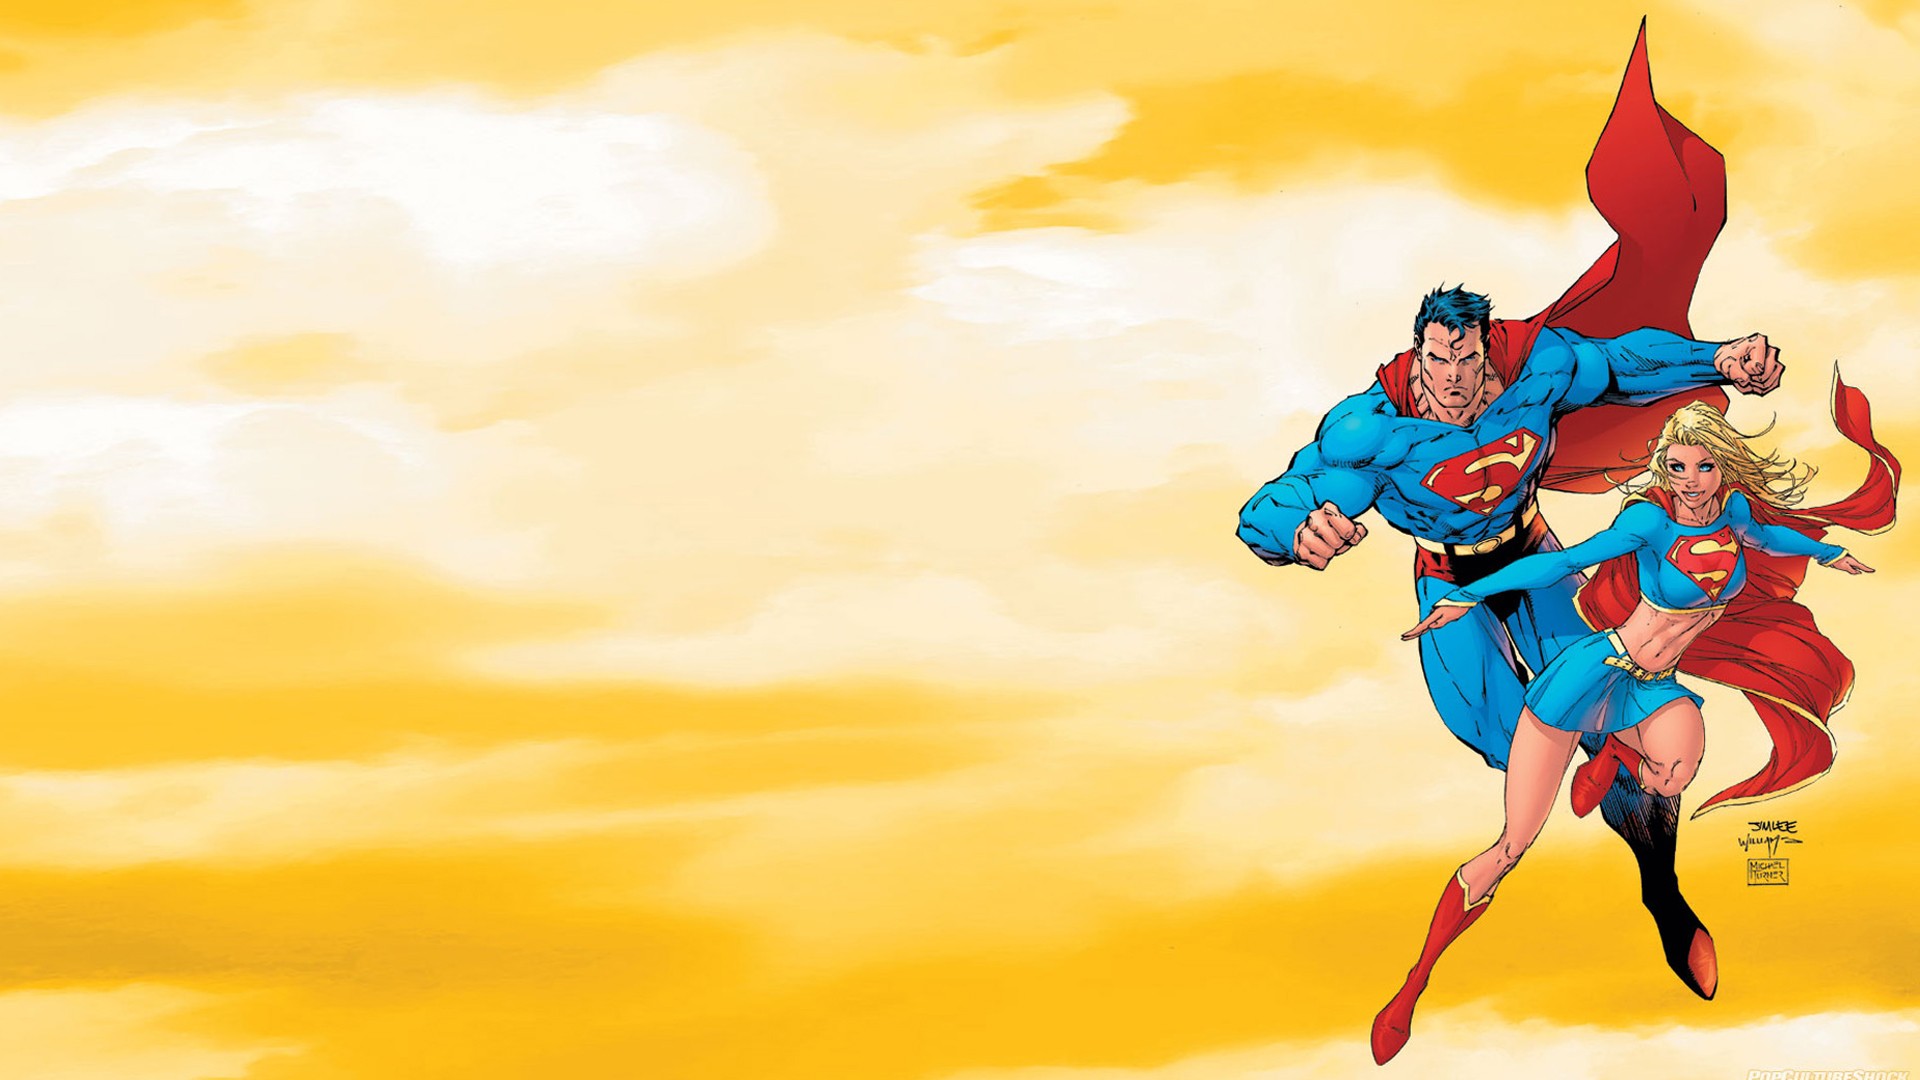 Superman Supergirl Comics Illustration Yellow Costumes Superhero DC Comics Michael Turner 1920x1080